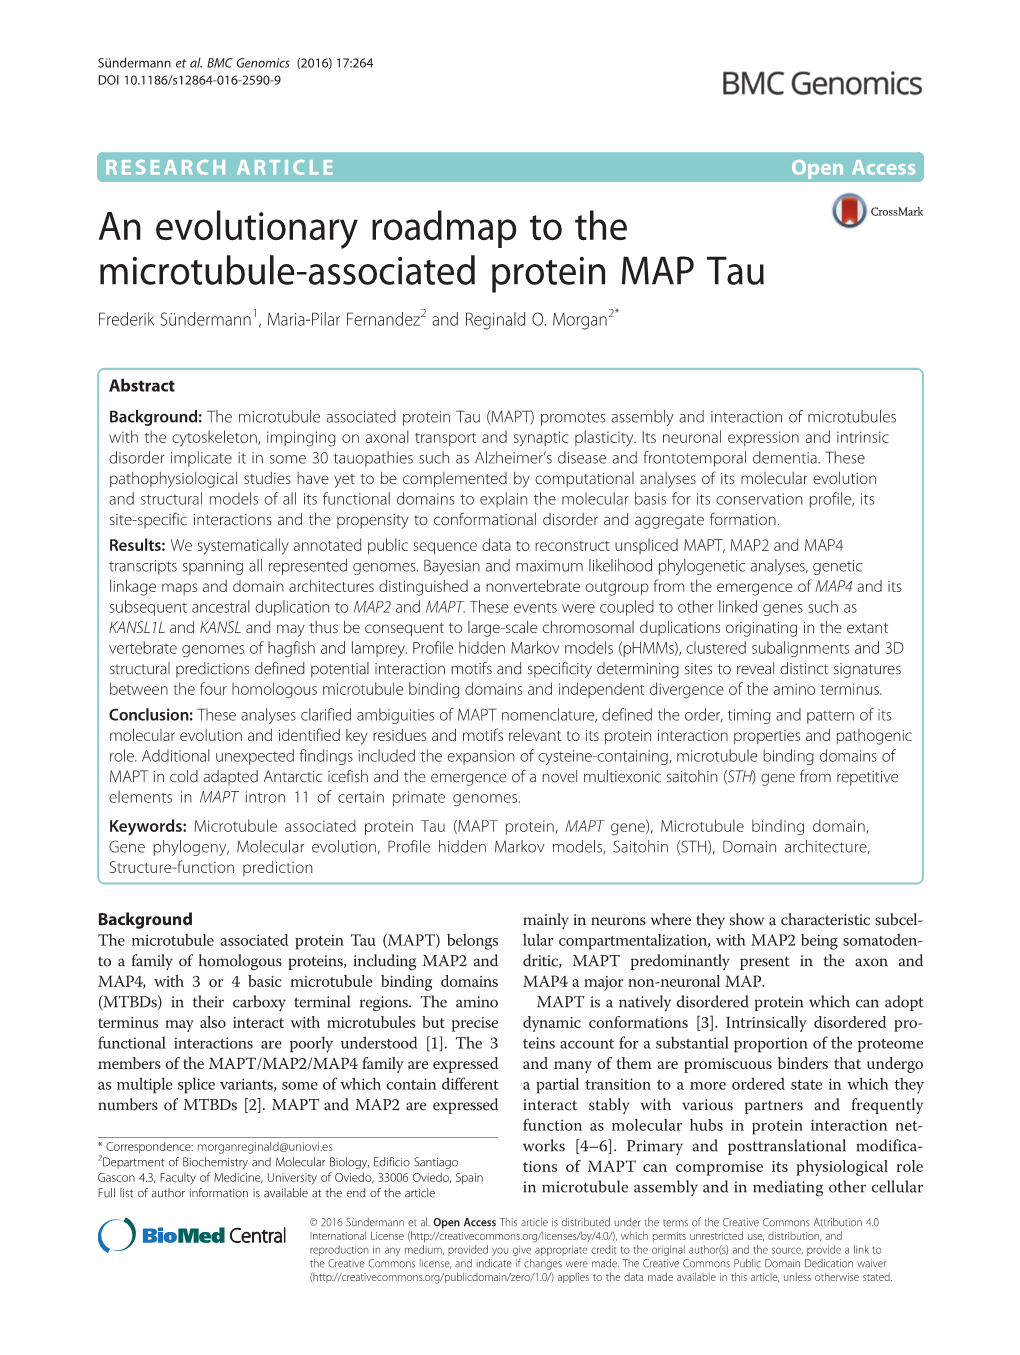 An Evolutionary Roadmap to the Microtubule-Associated Protein MAP Tau Frederik Sündermann1, Maria-Pilar Fernandez2 and Reginald O